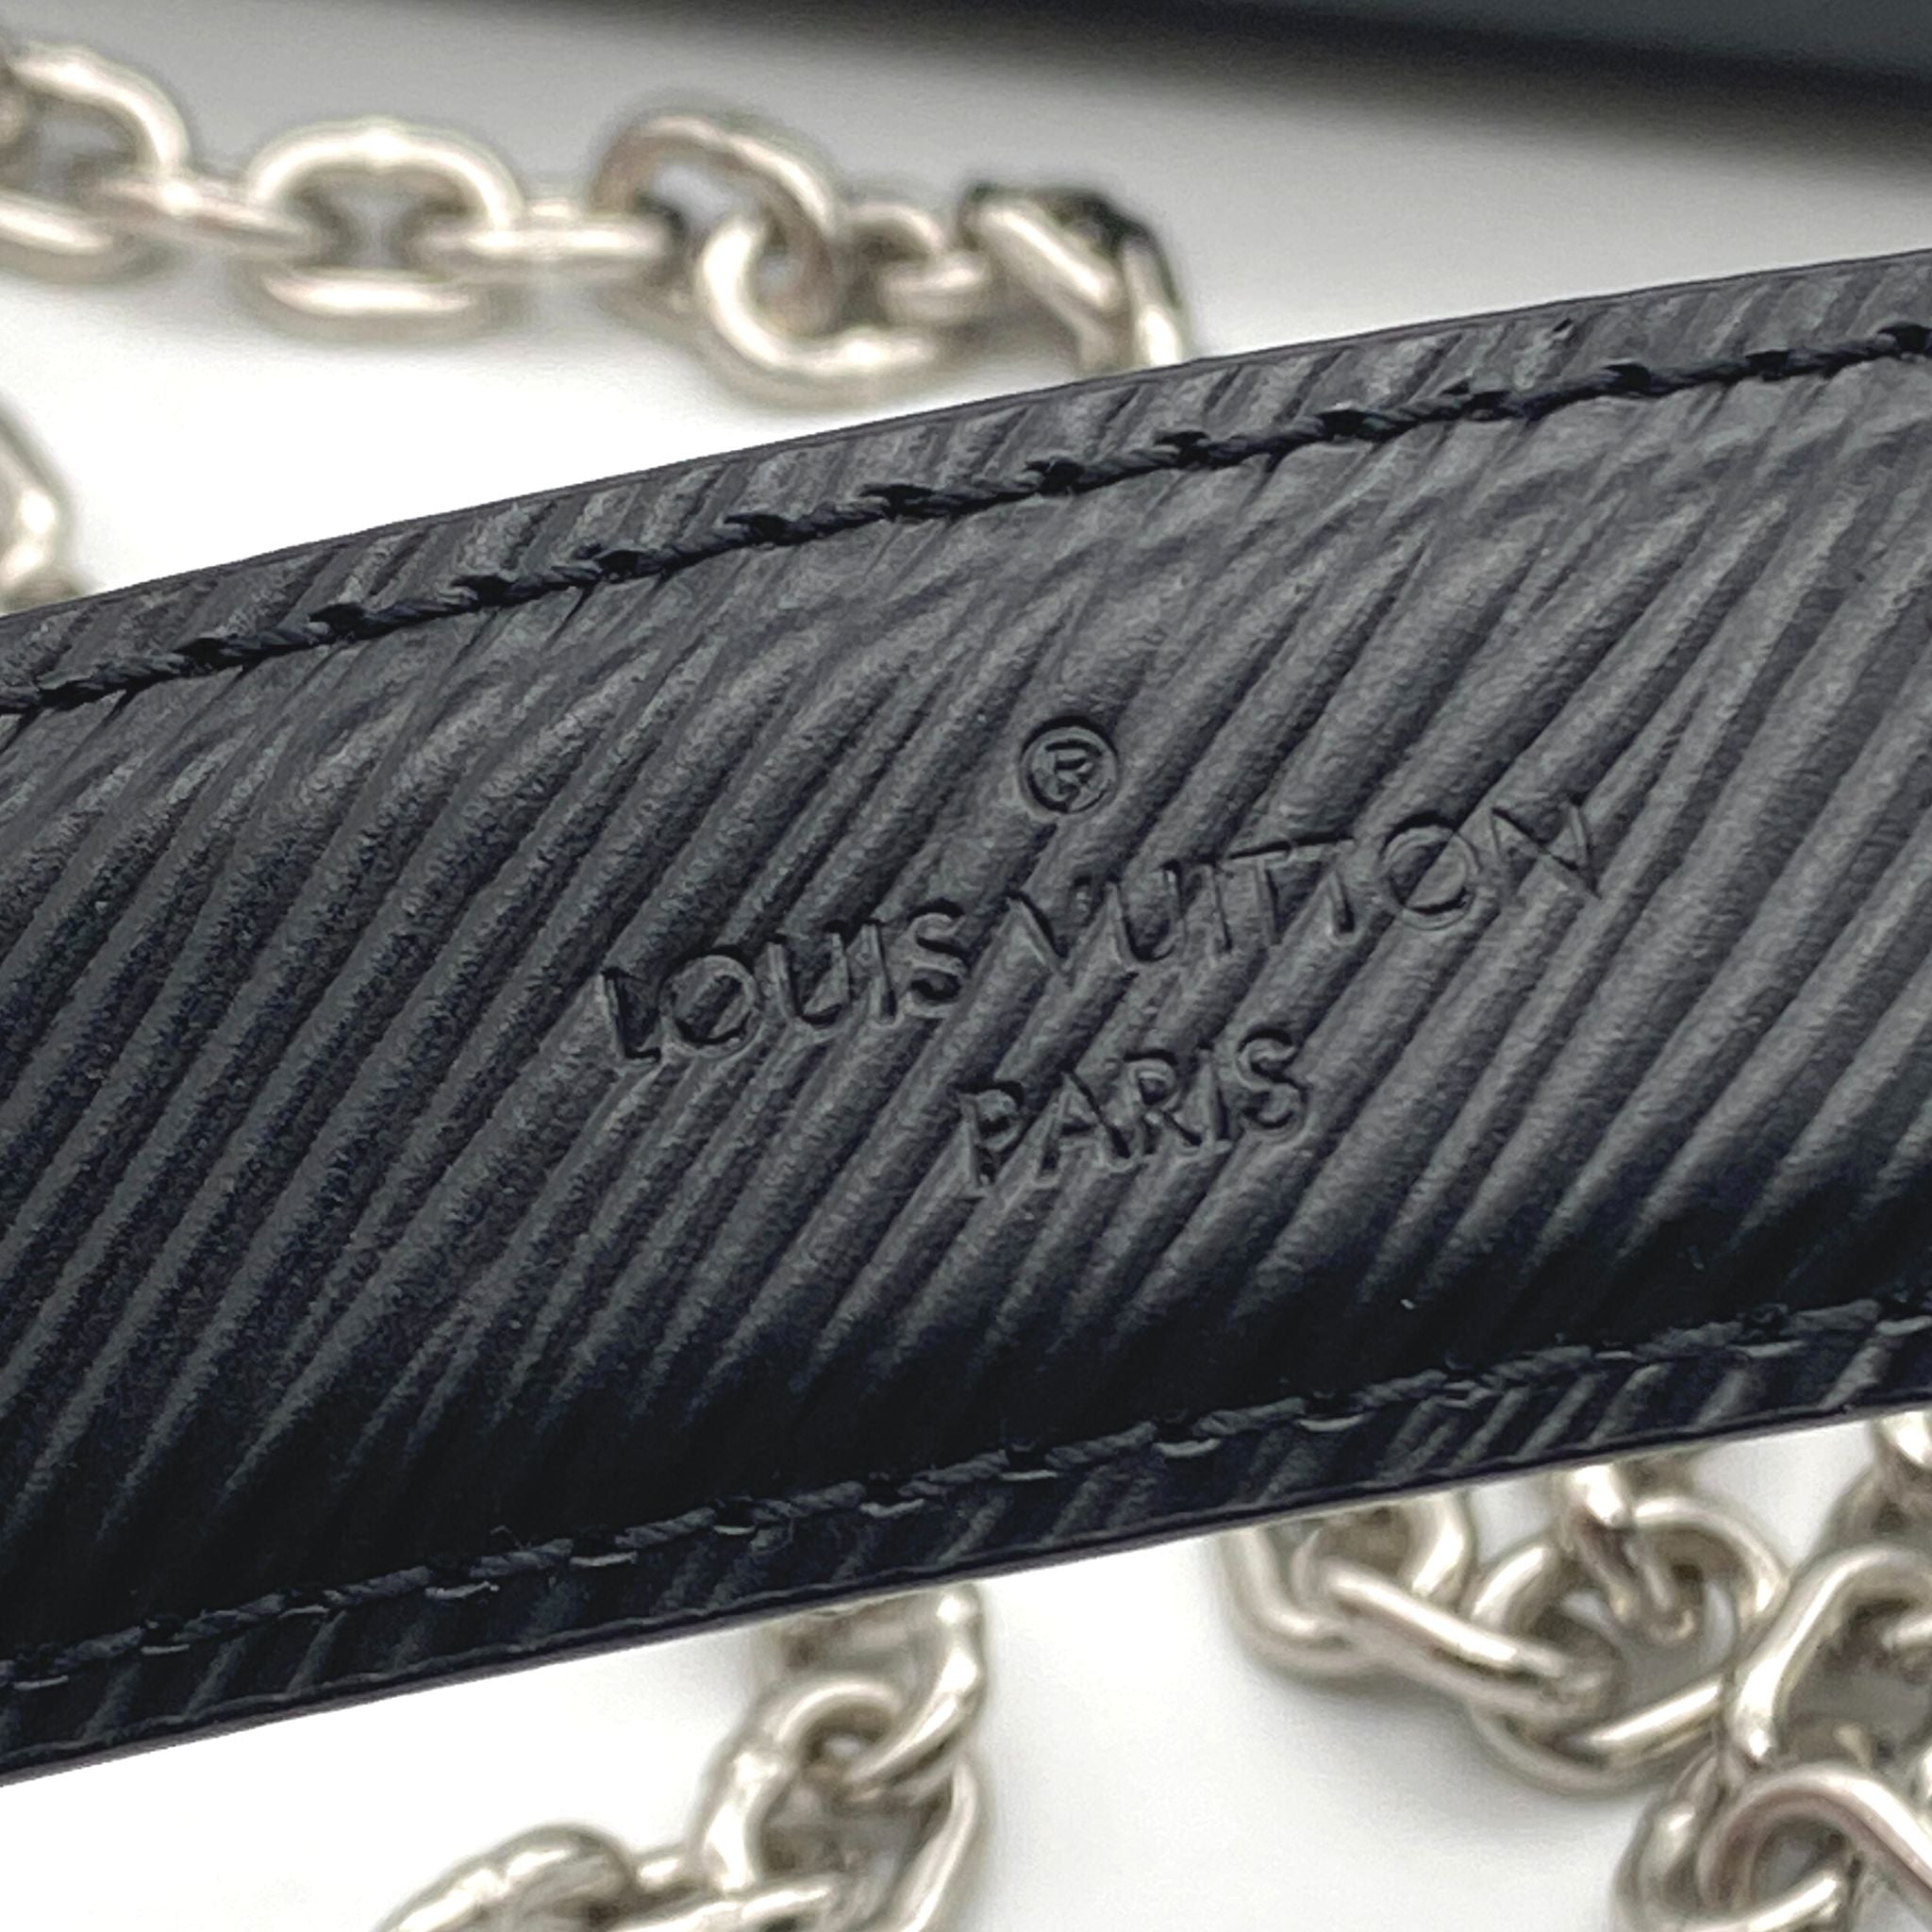 Twist long chain wallet leather crossbody bag Louis Vuitton Black